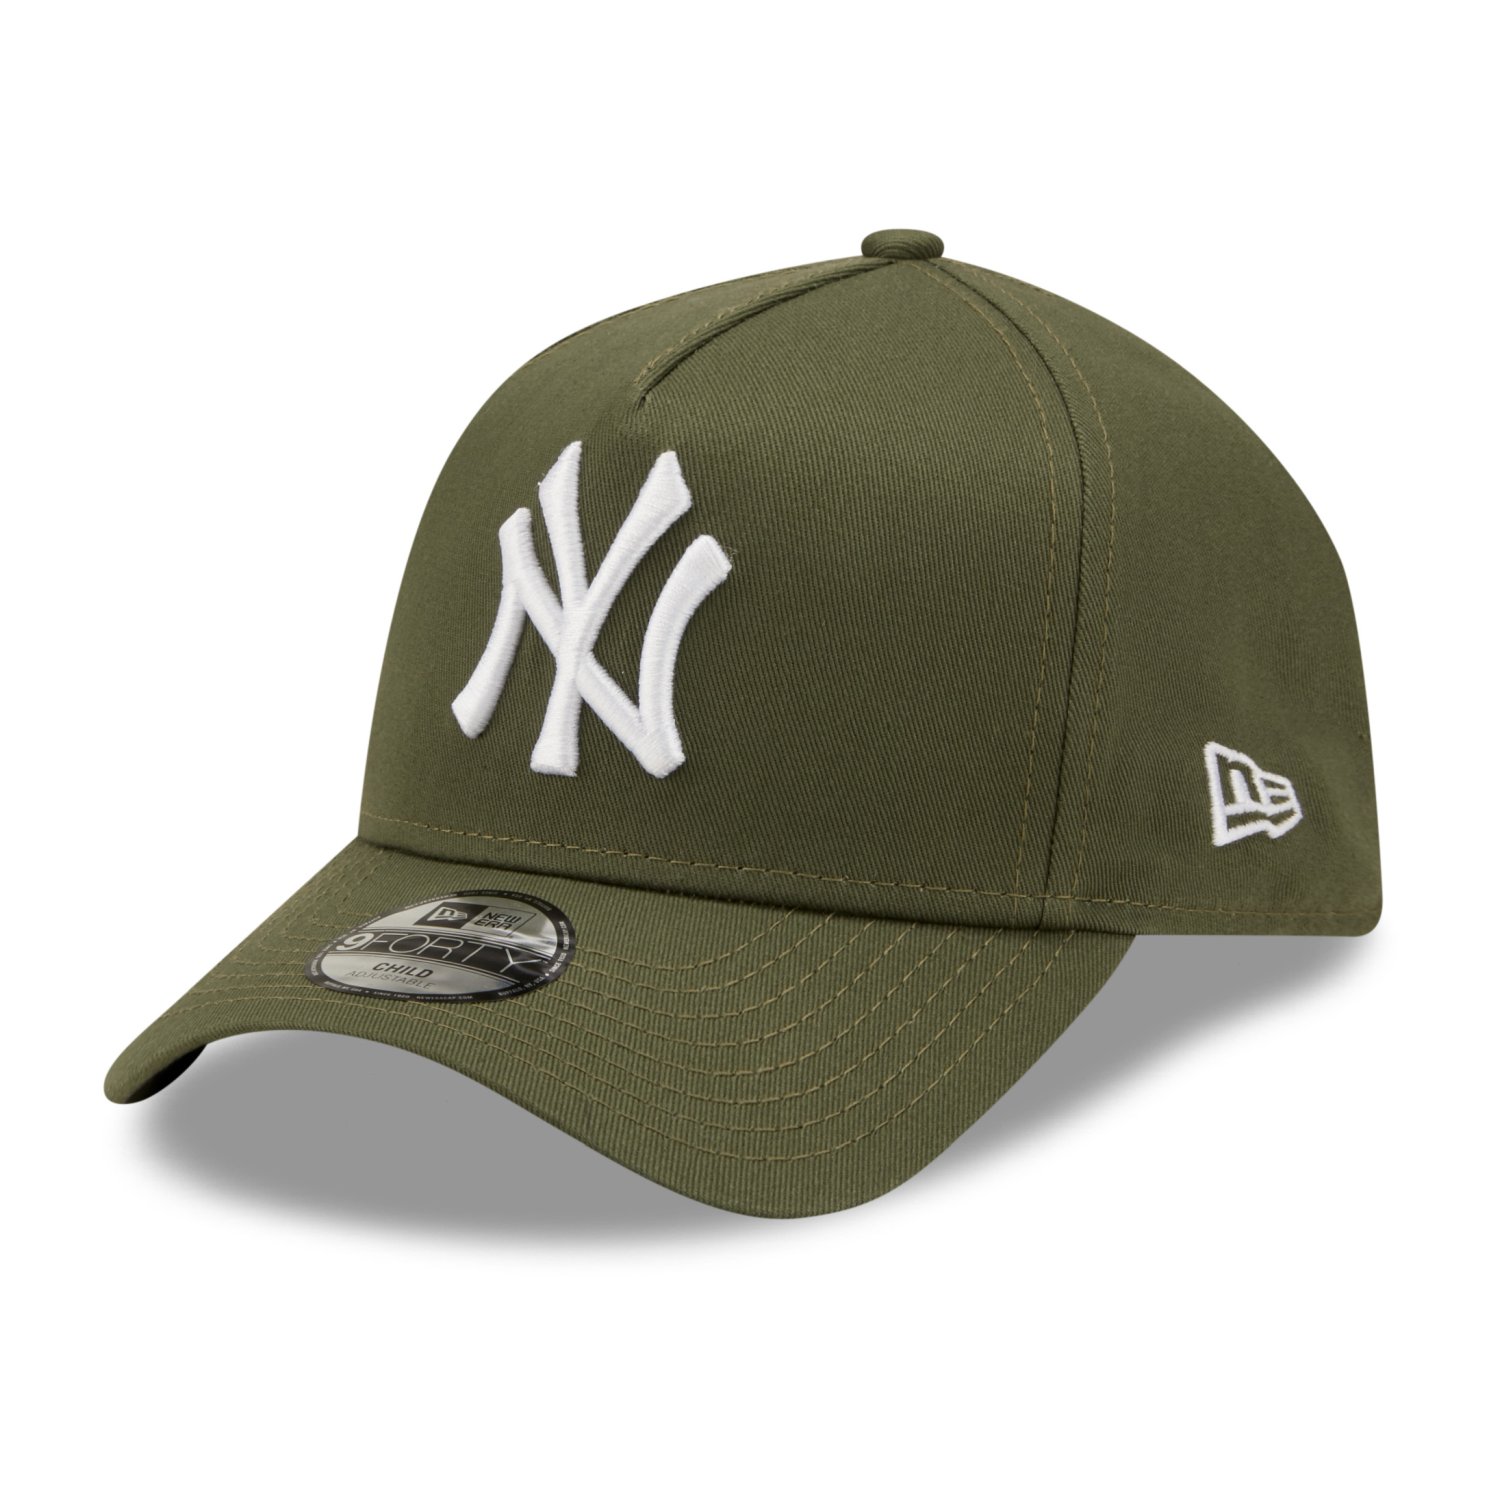 New Era Kinder Trucker Cap - New York Yankees oliv | Kinder | Caps ...